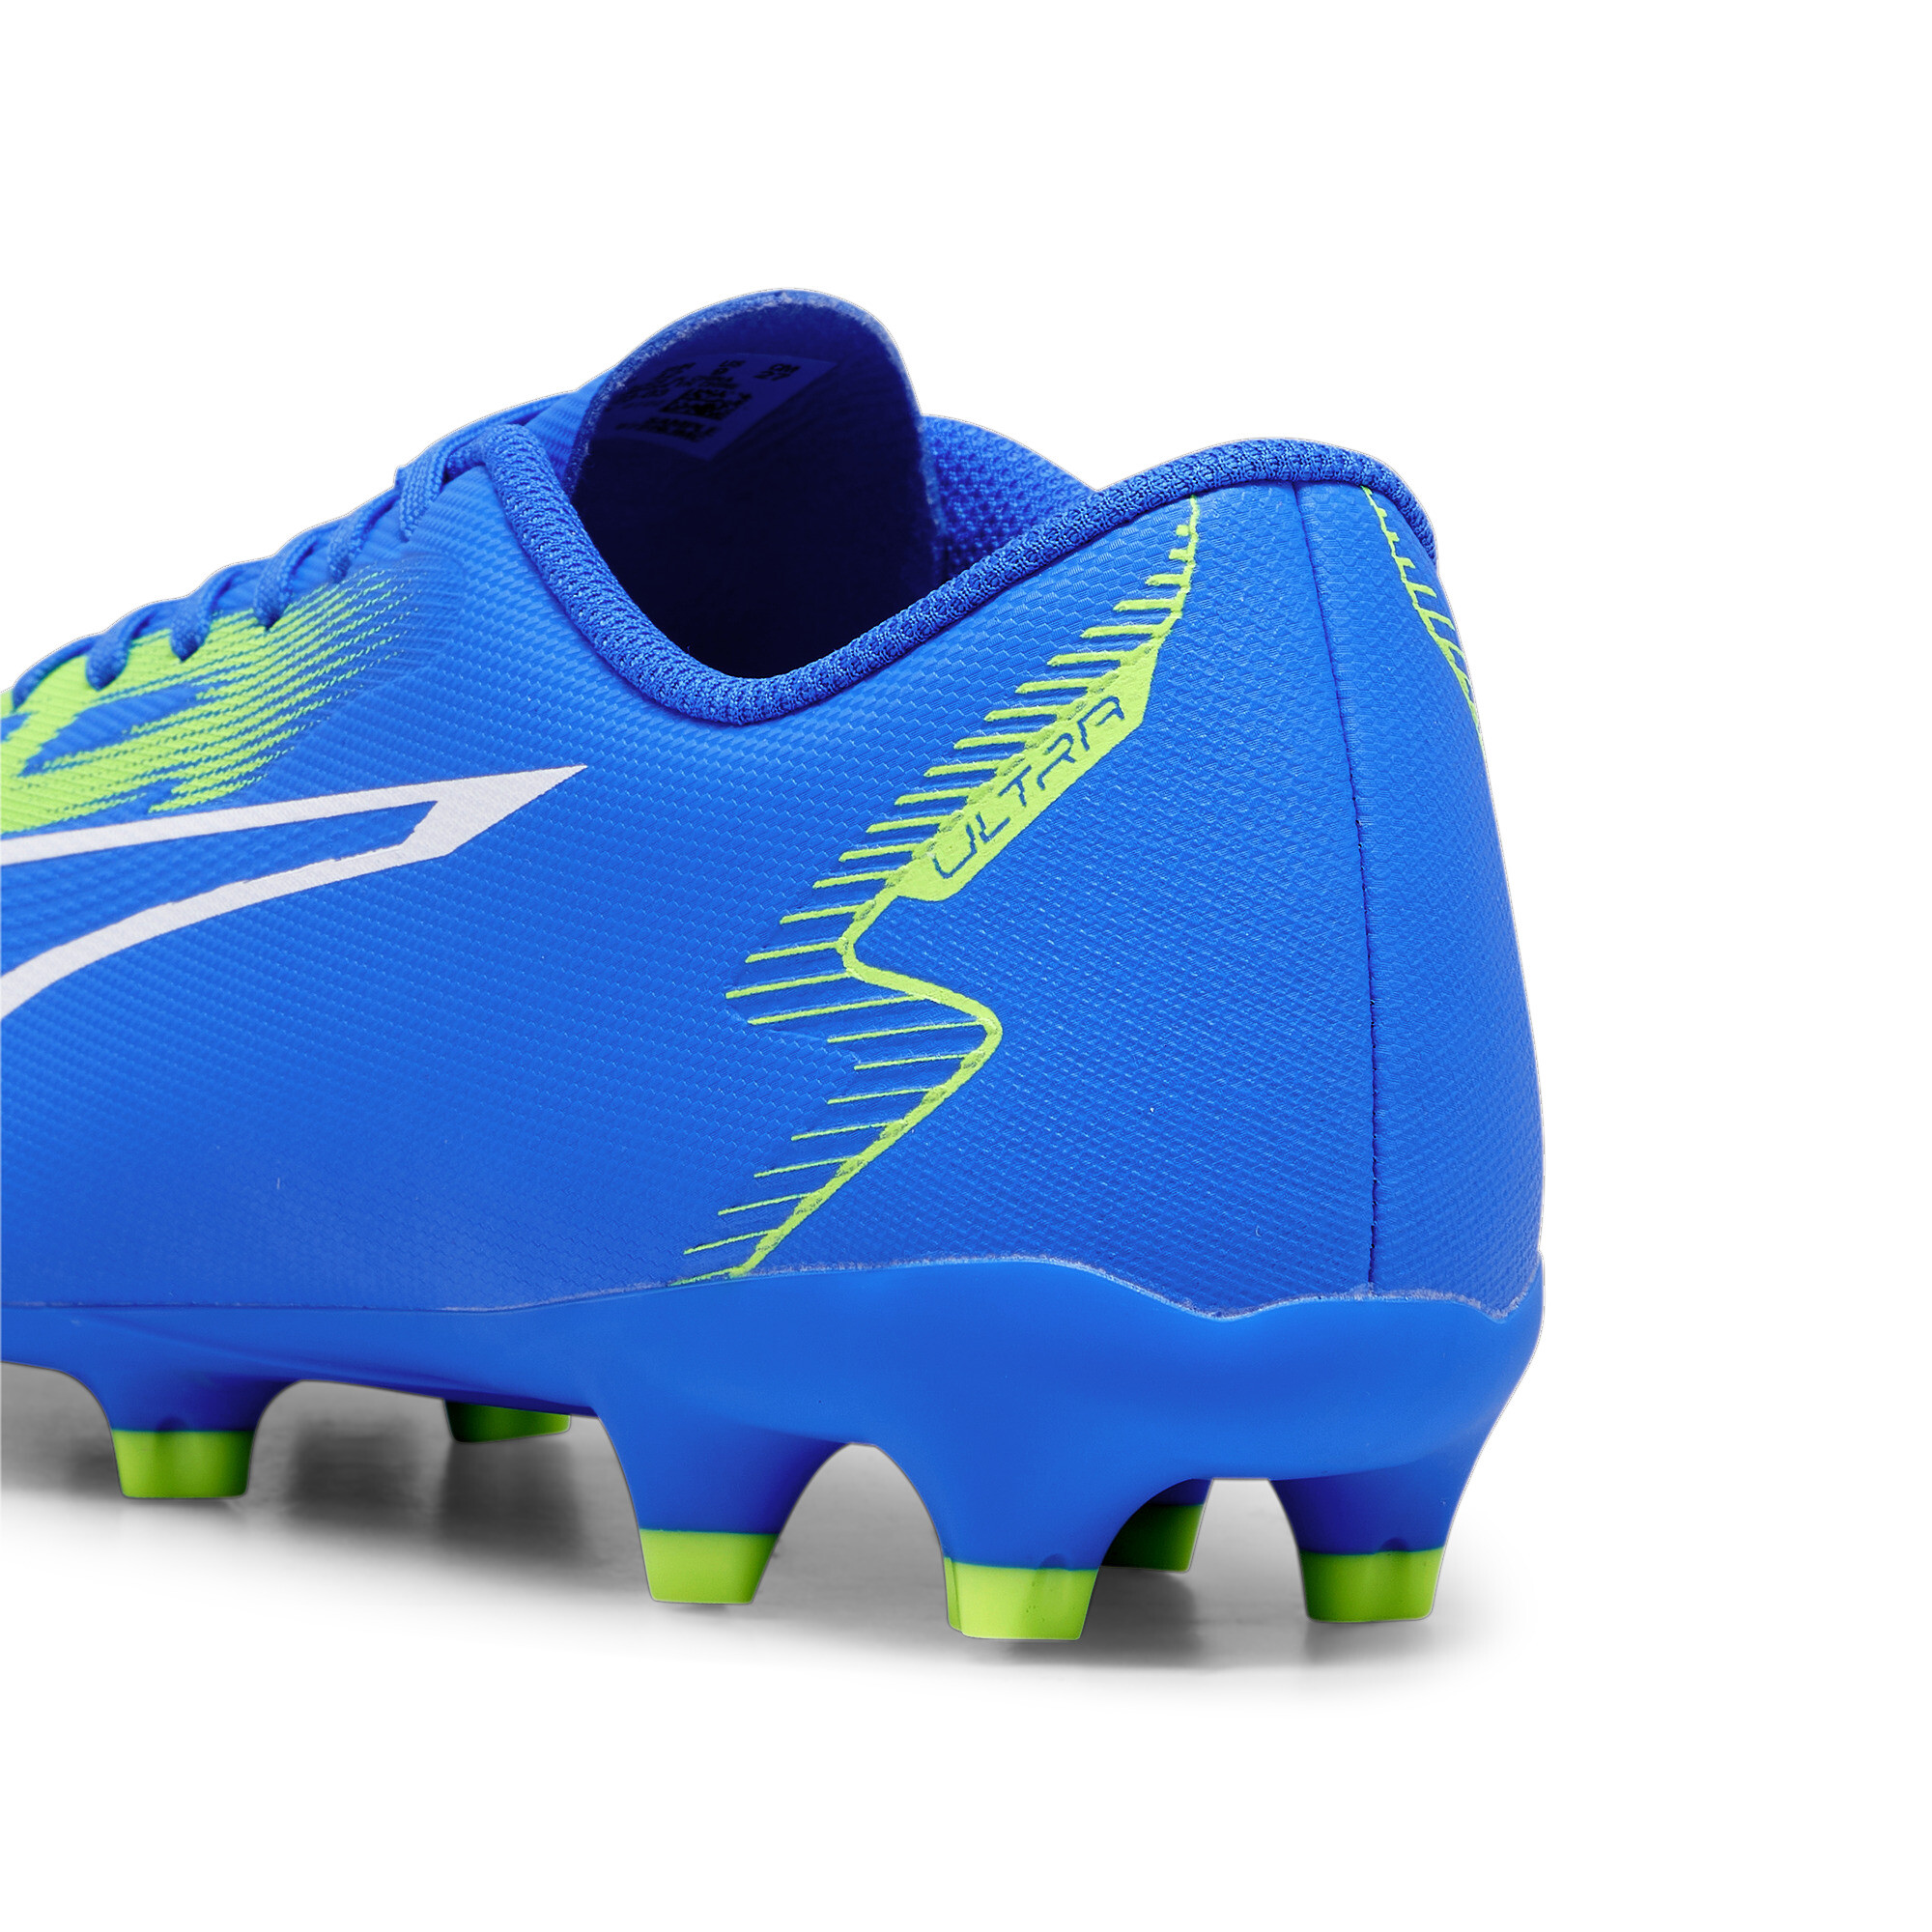 Men's PUMA ULTRA PLAY FG/AG Football Boots In Blue, Size EU 42.5